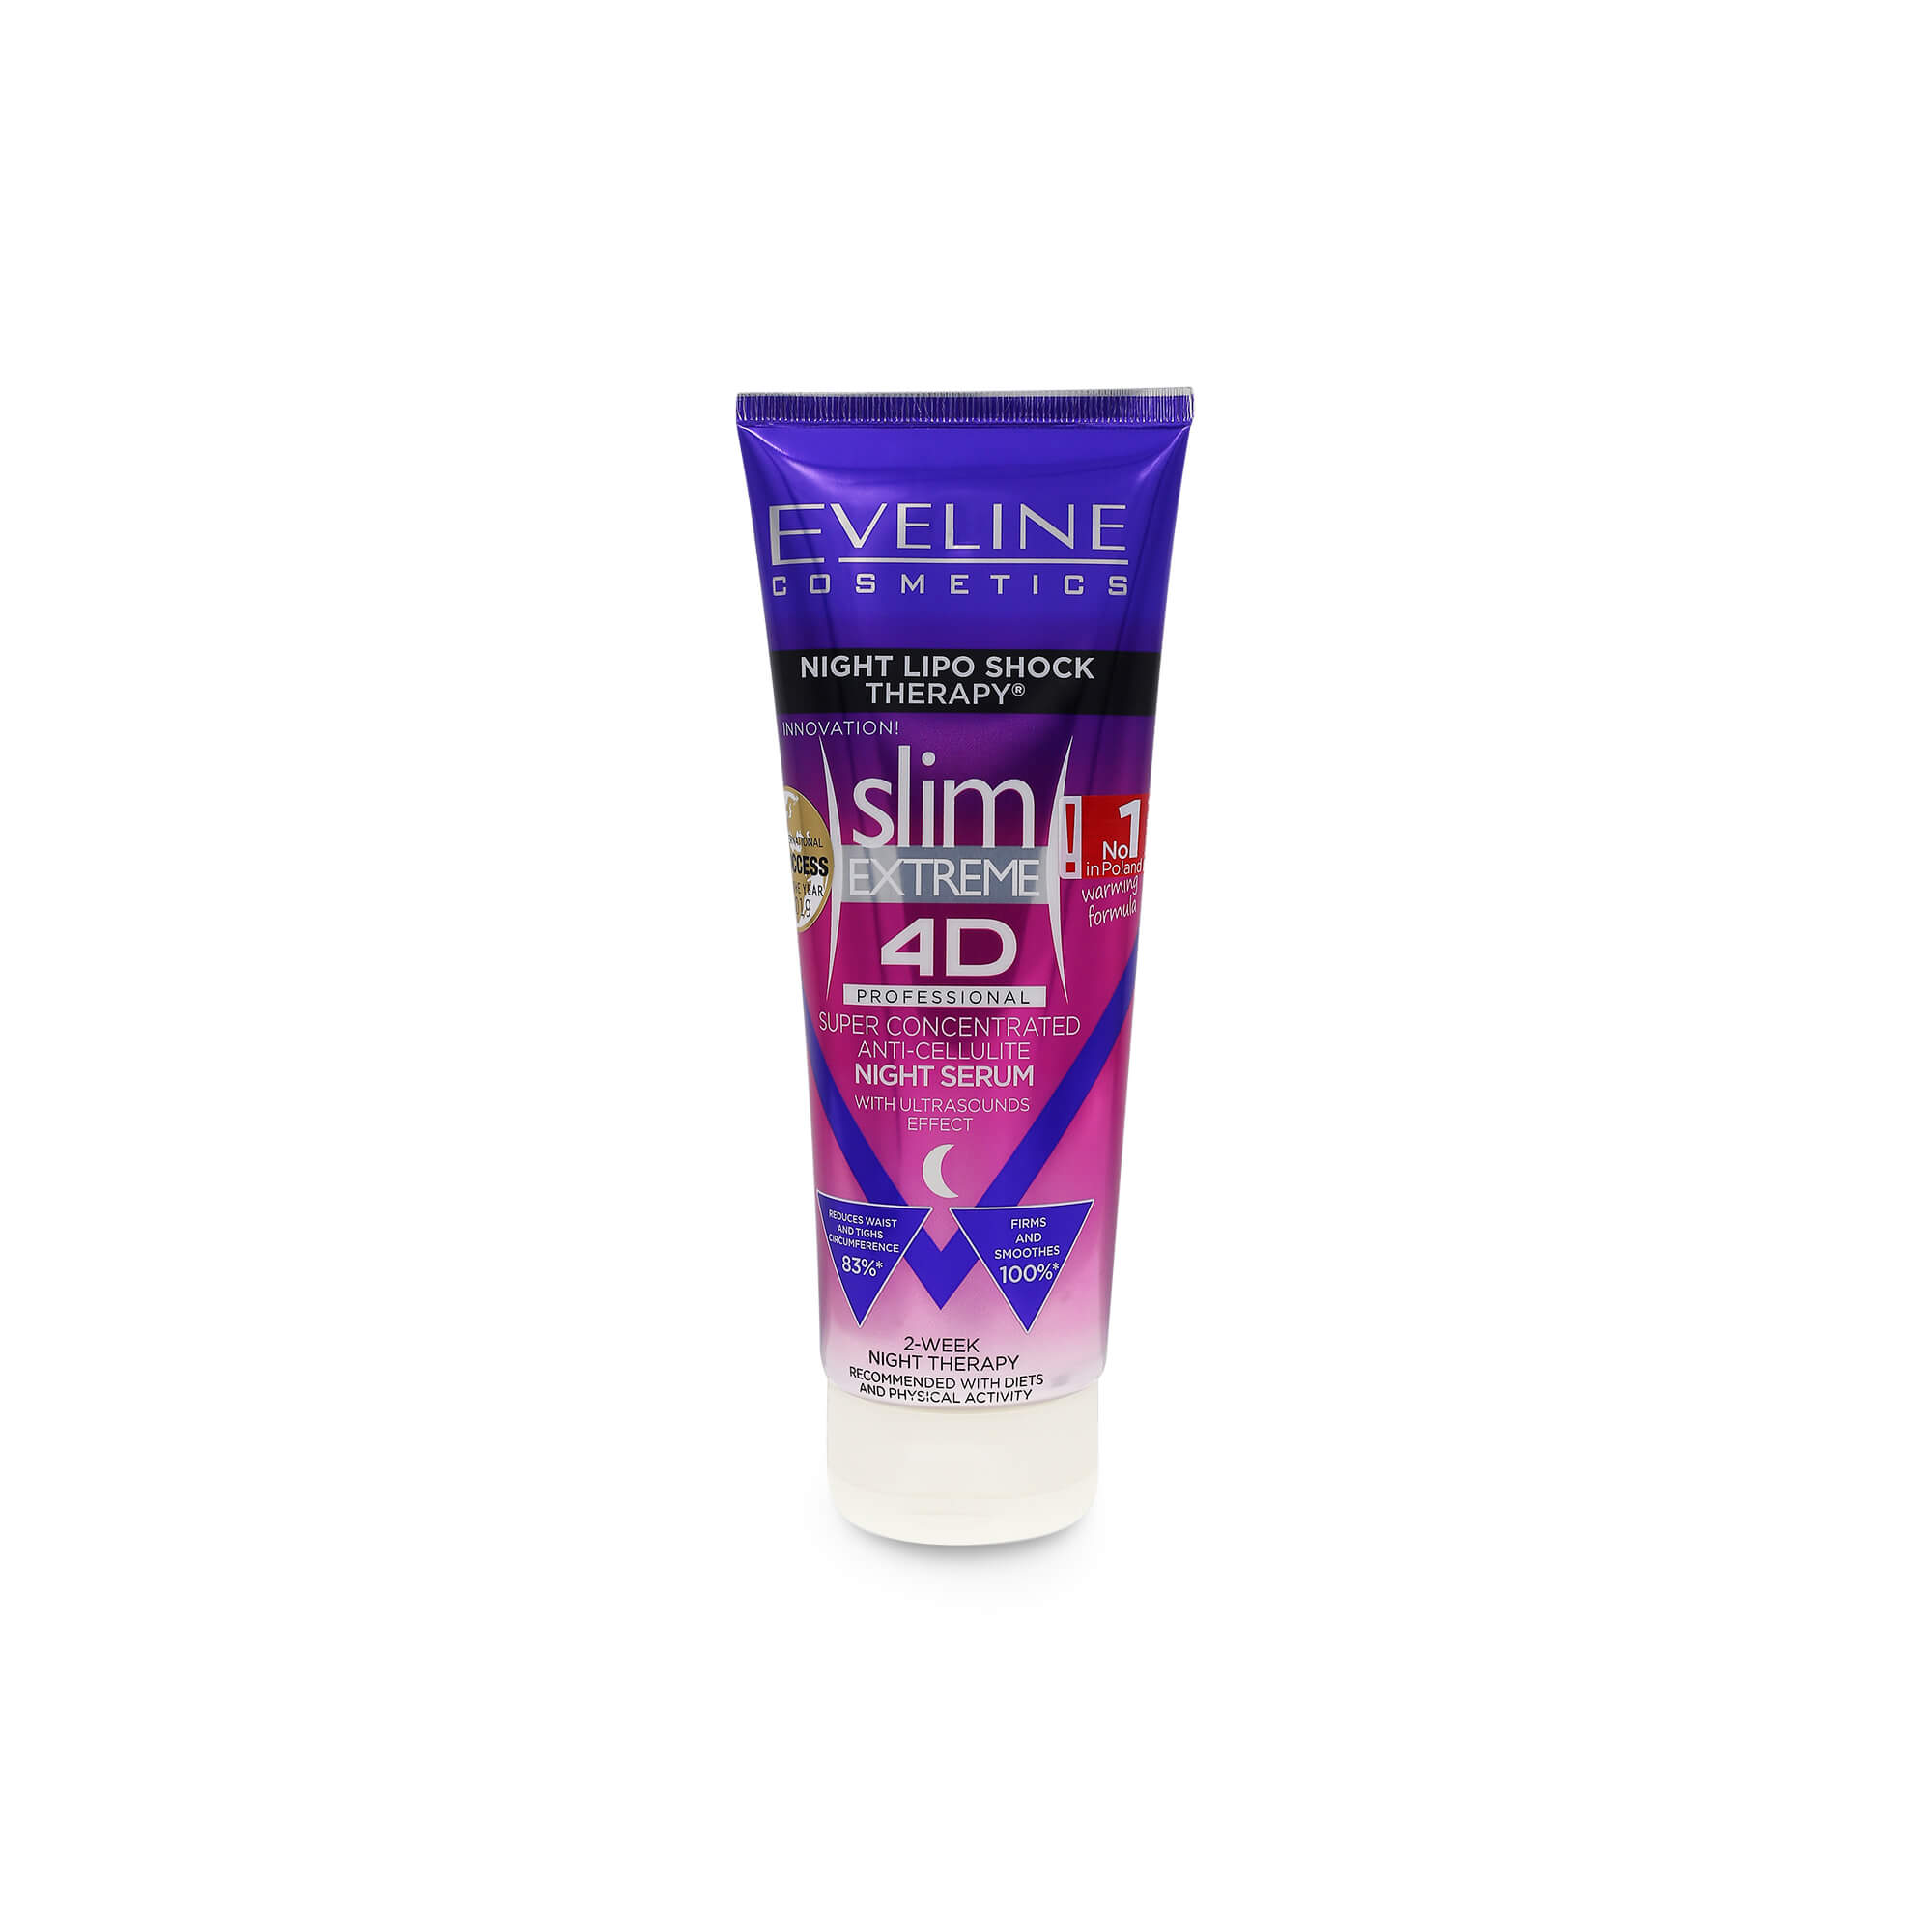 Slim Extreme 4D Professional Super Concentrated Anti-cellulite Night Serum